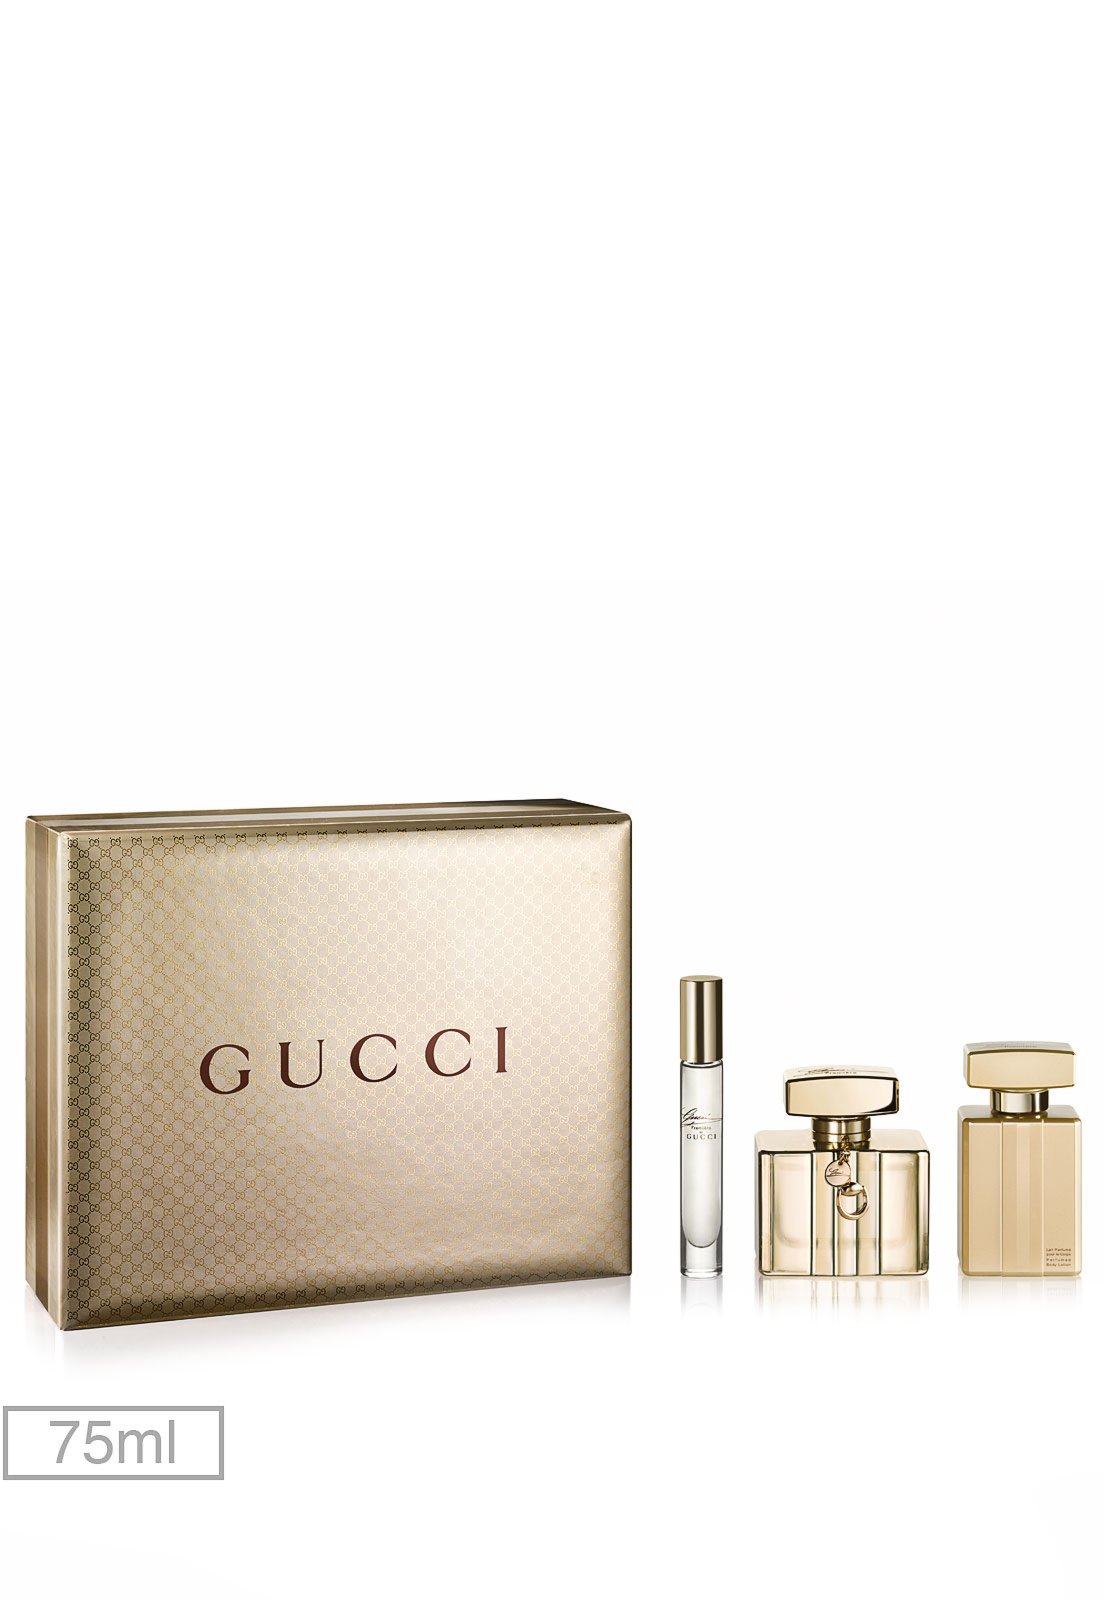 Gucci Premiere Woman Eau de Parfum 50ml Nuevo 746480021608 | eBay